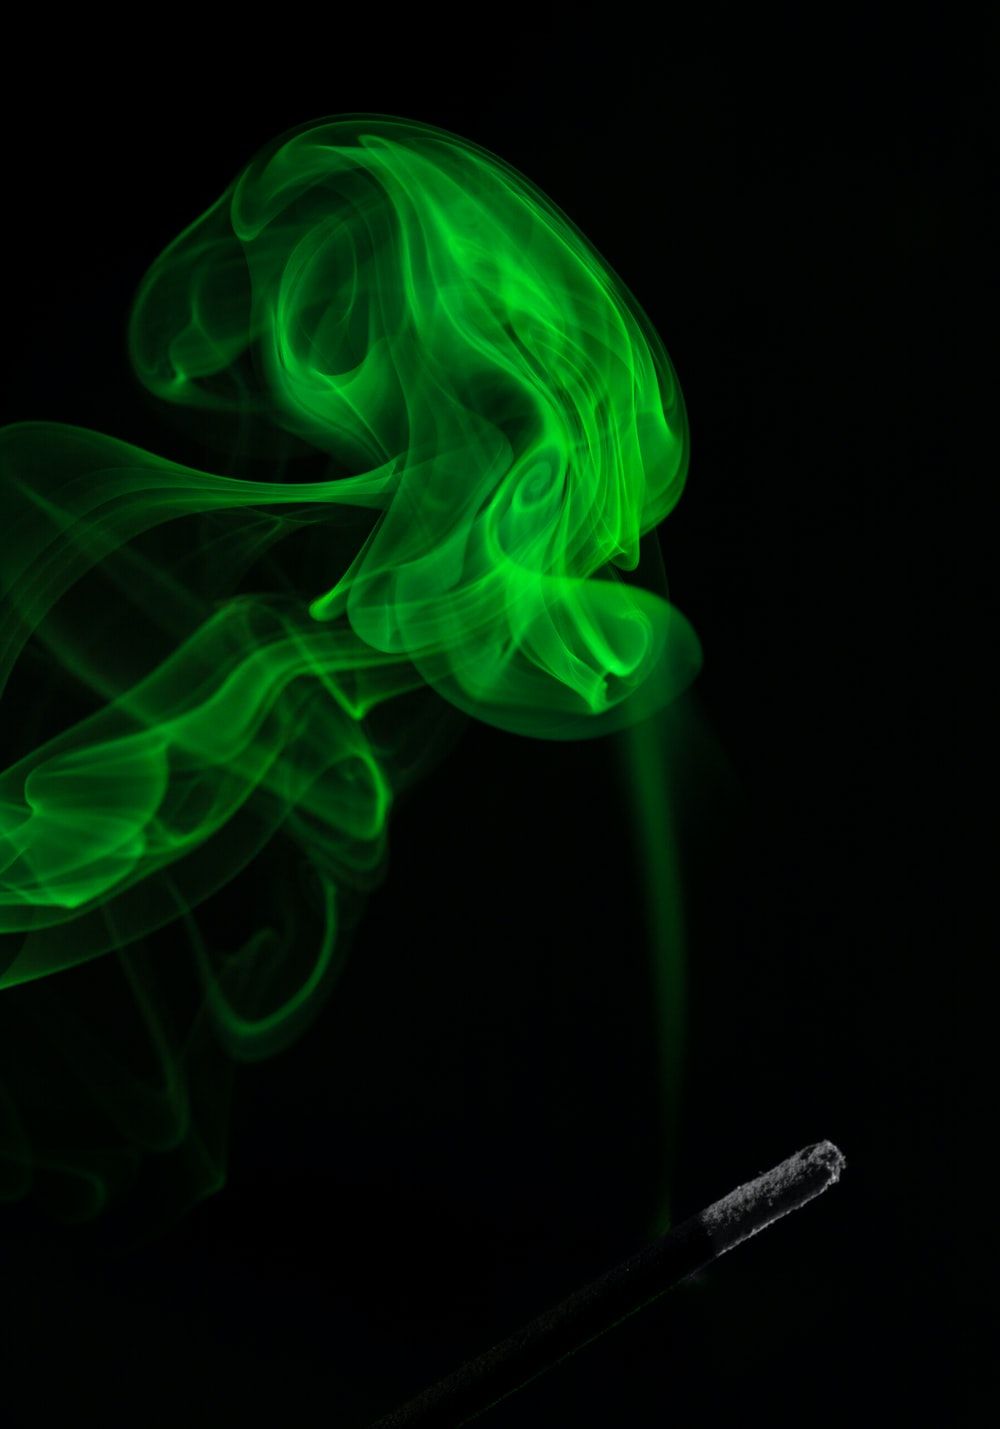 Green Smoke Picture. Download Free Image